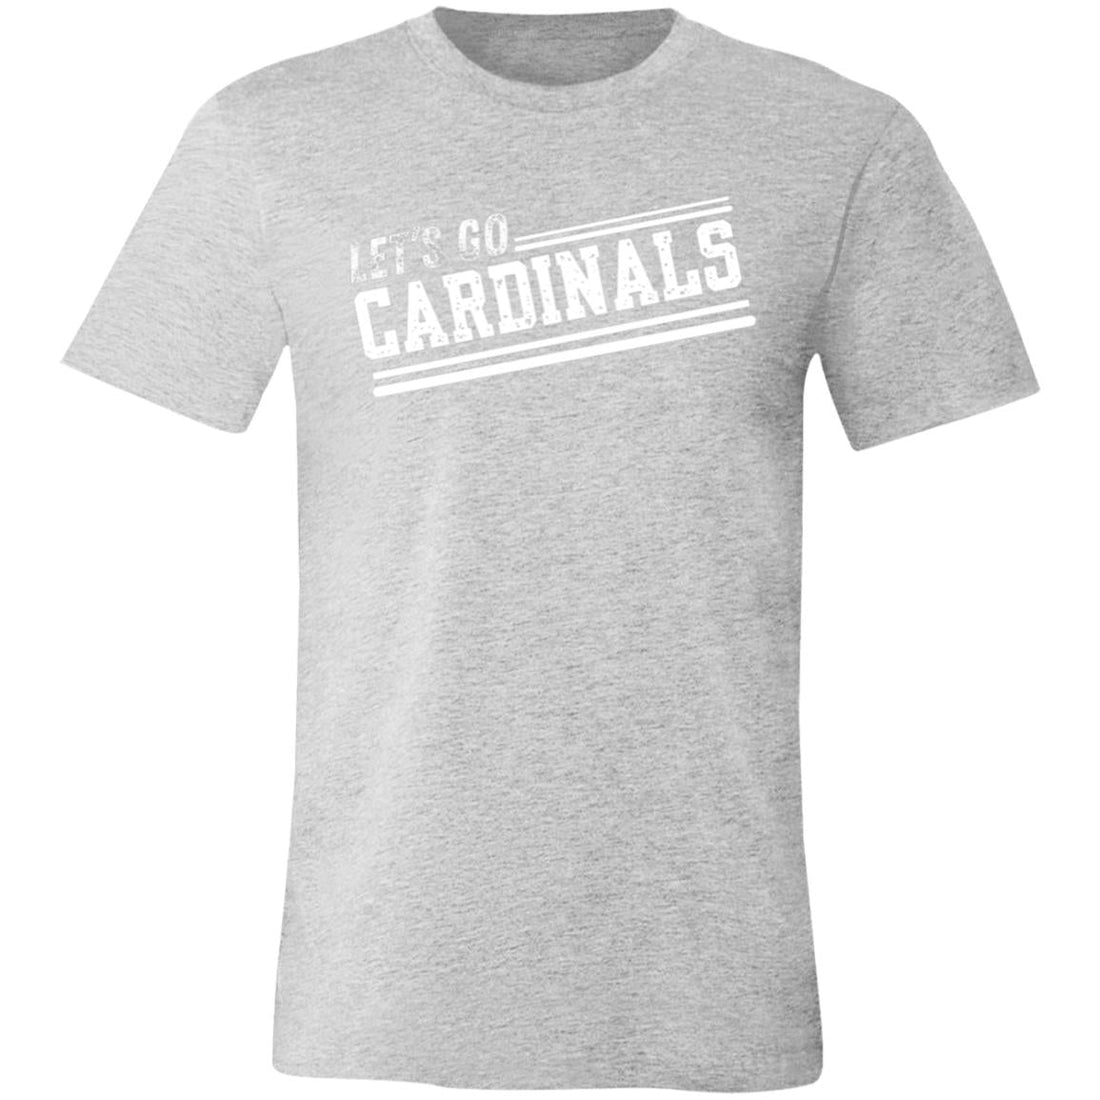 Let's Go Cardinals T - Shirt - T - Shirts - Positively Sassy - Let's Go Cardinals T - Shirt